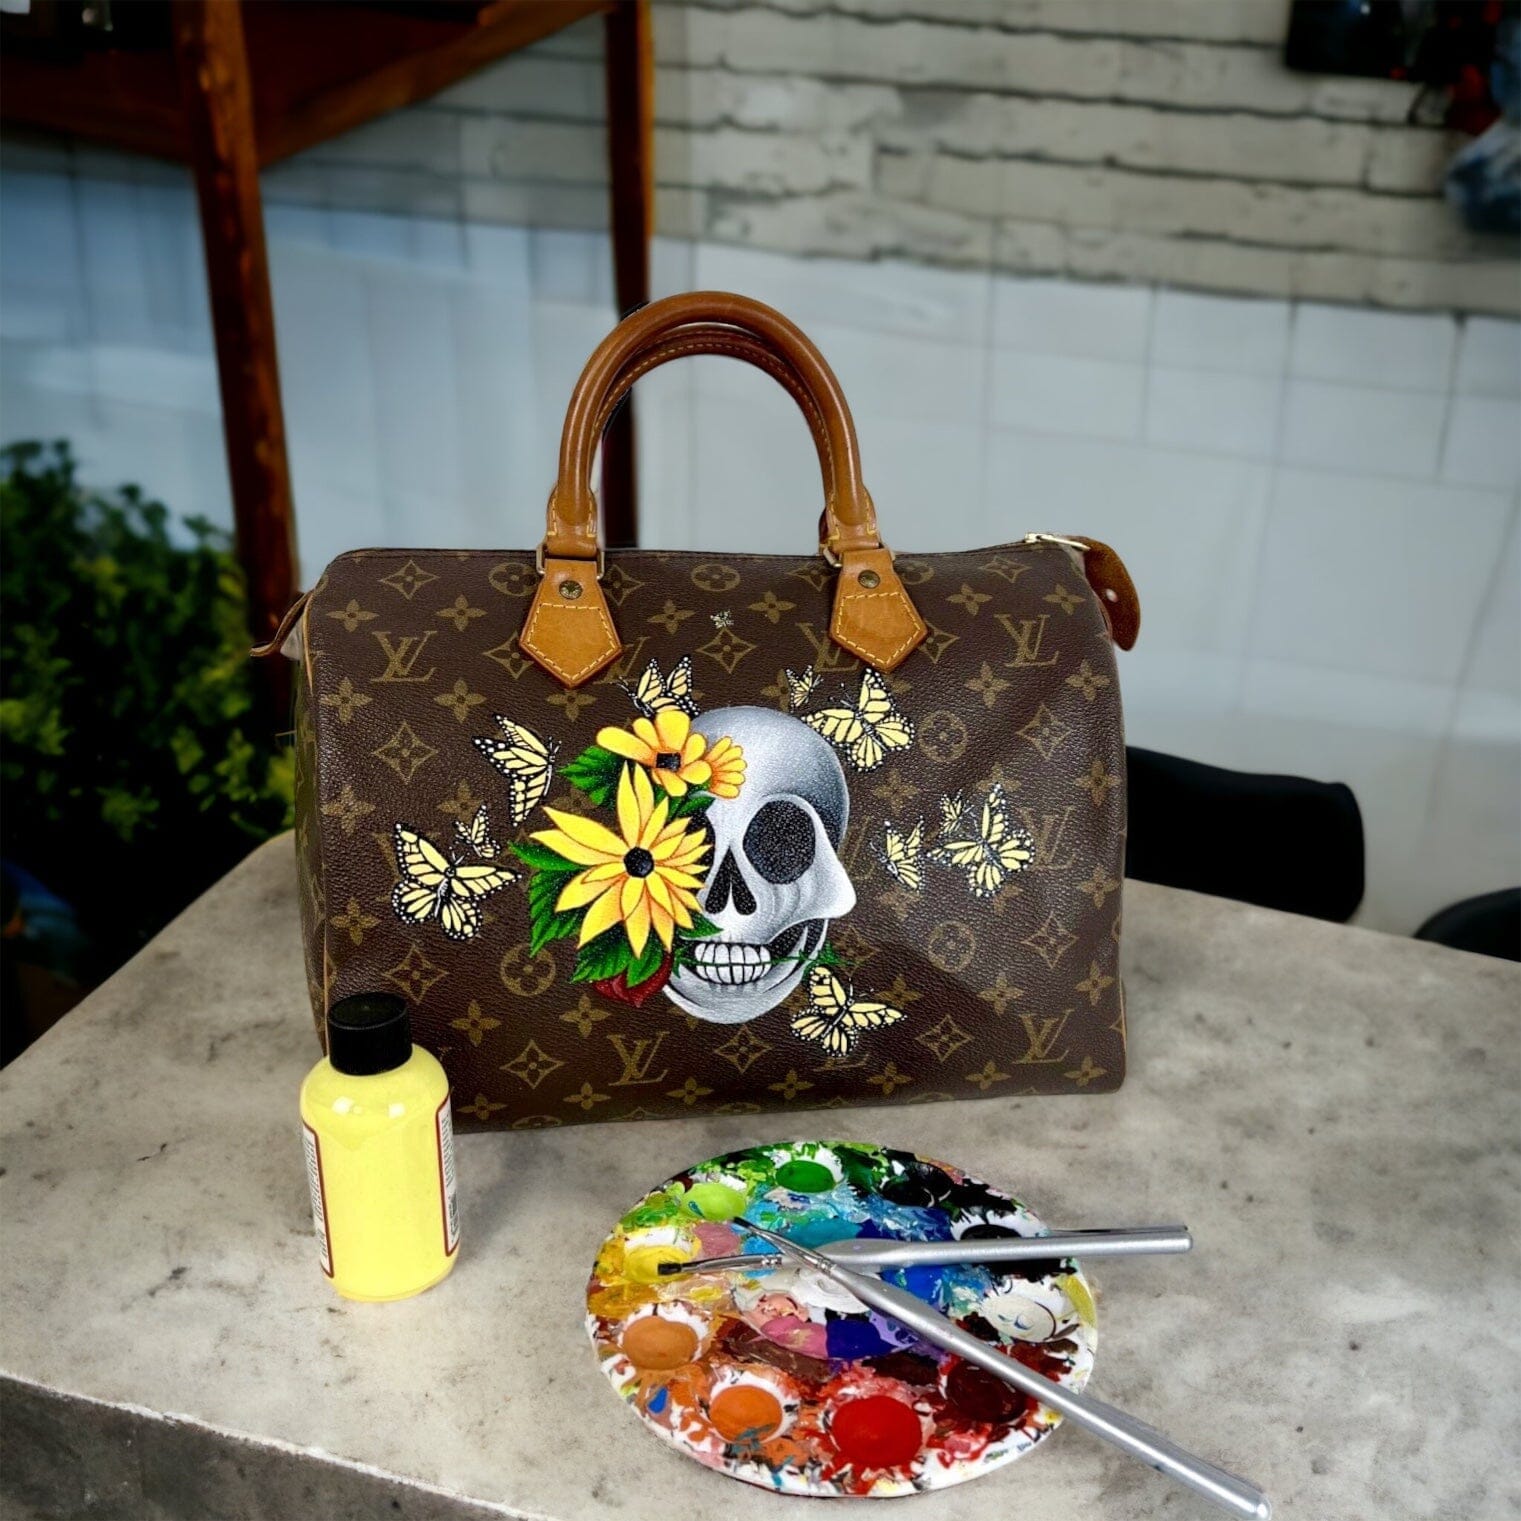 painted louis vuitton handbags